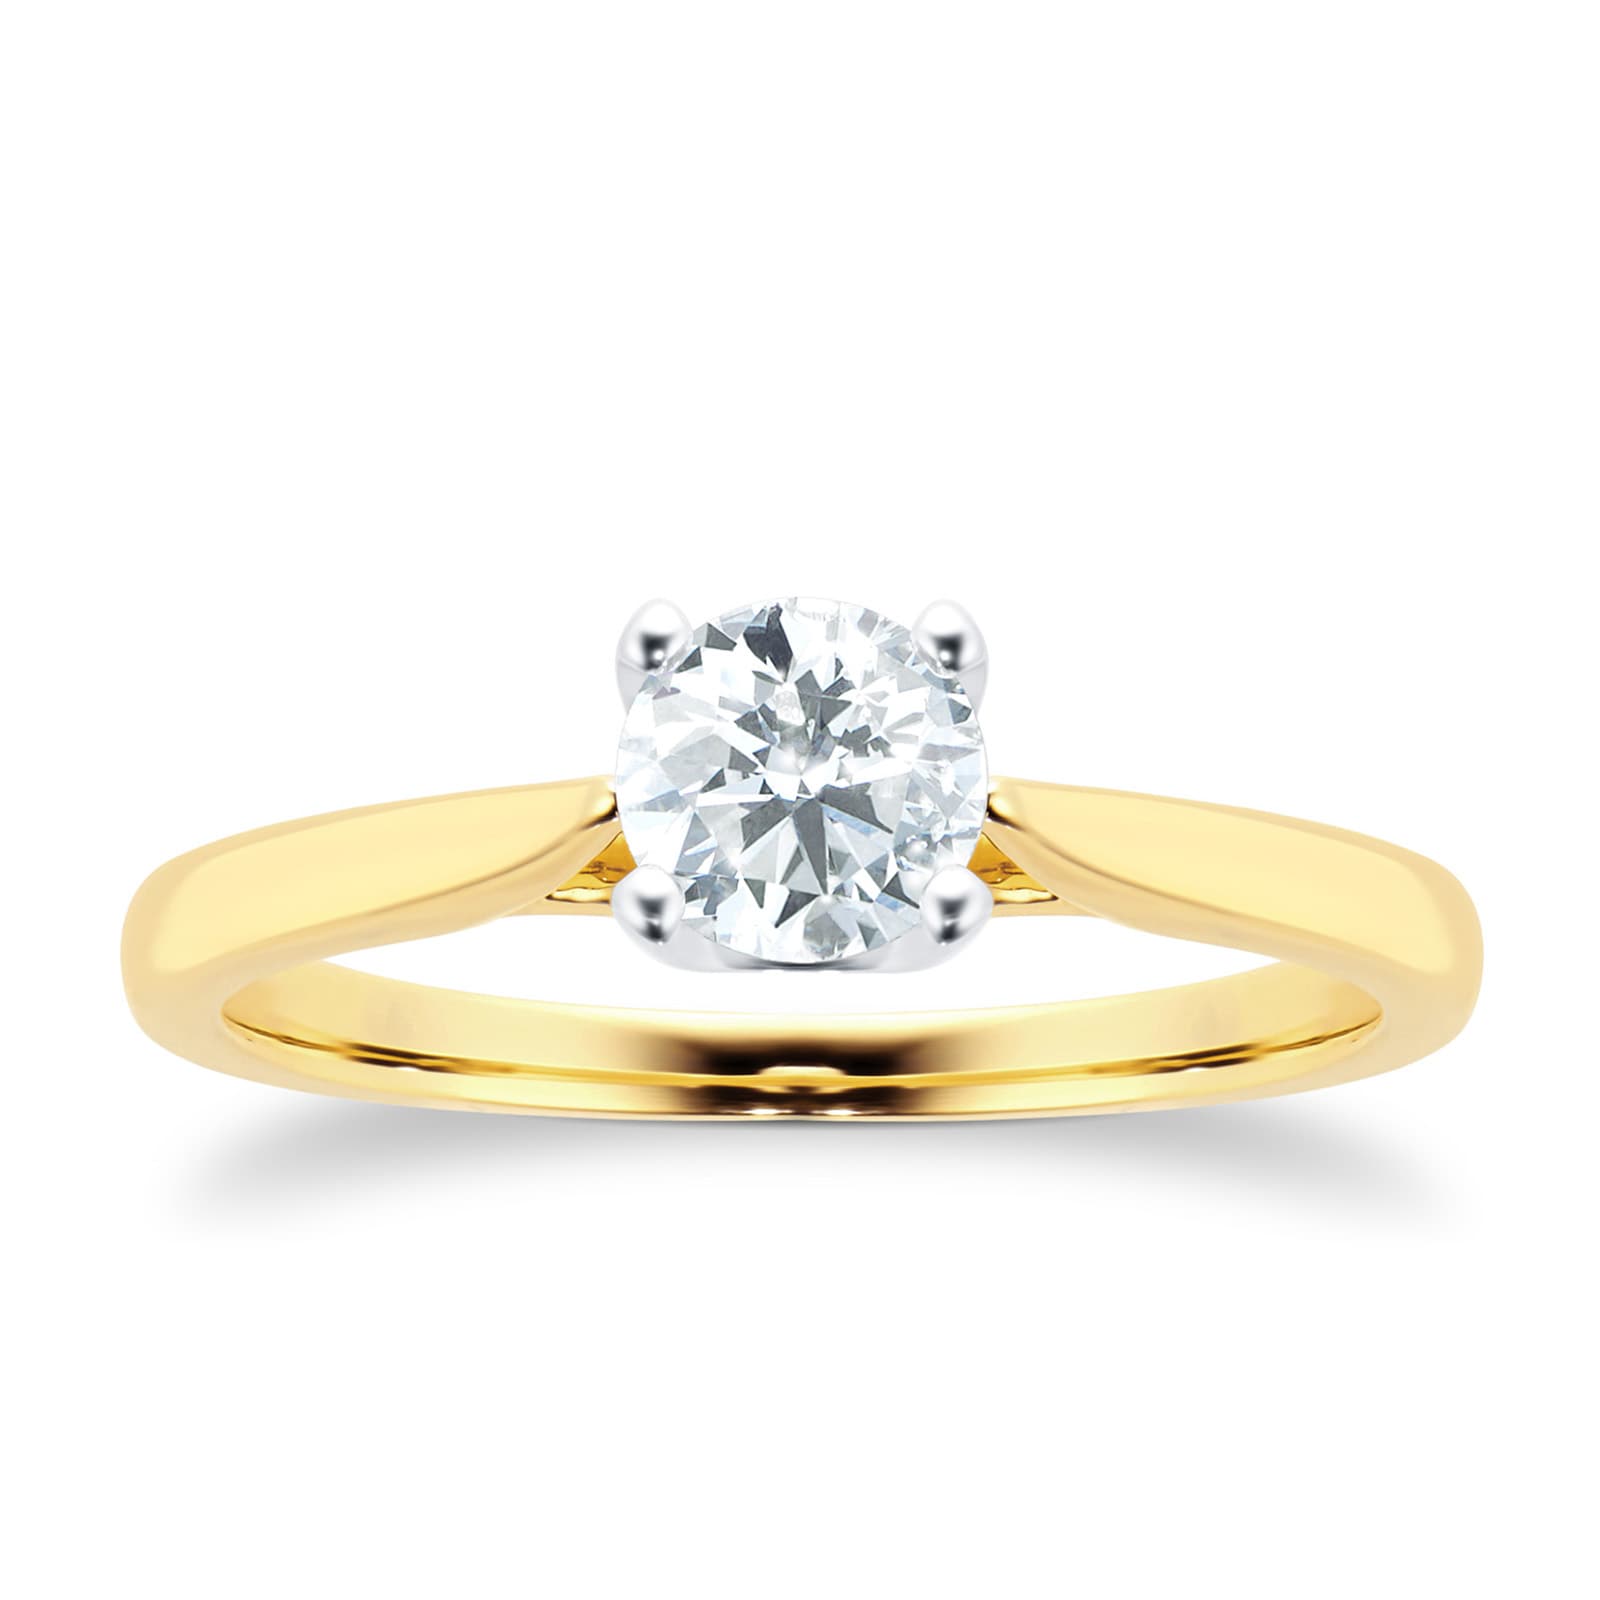 18ct Yellow Gold Brilliant Cut 0.50 Carat 88 Facet Diamond Ring - Ring Size Q